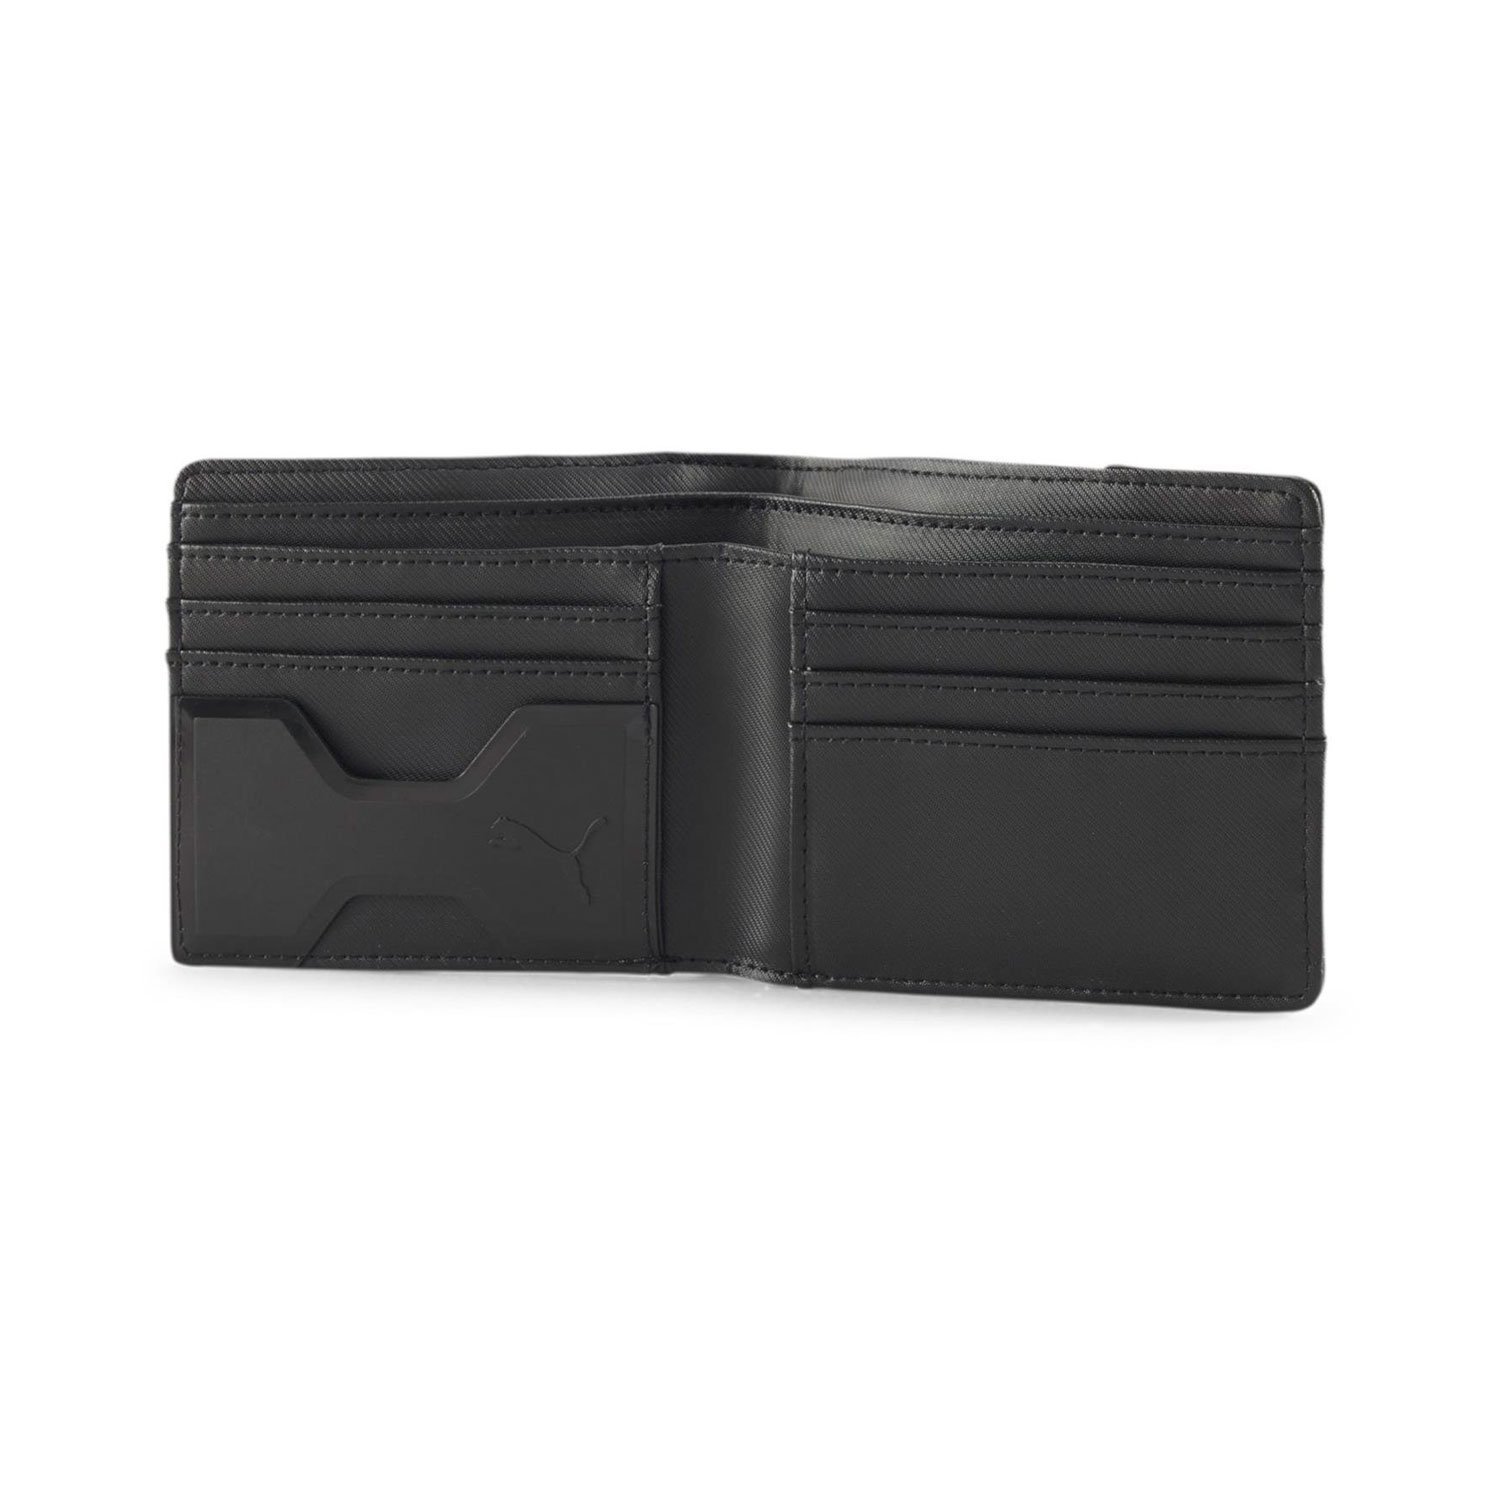 puma m series wallet